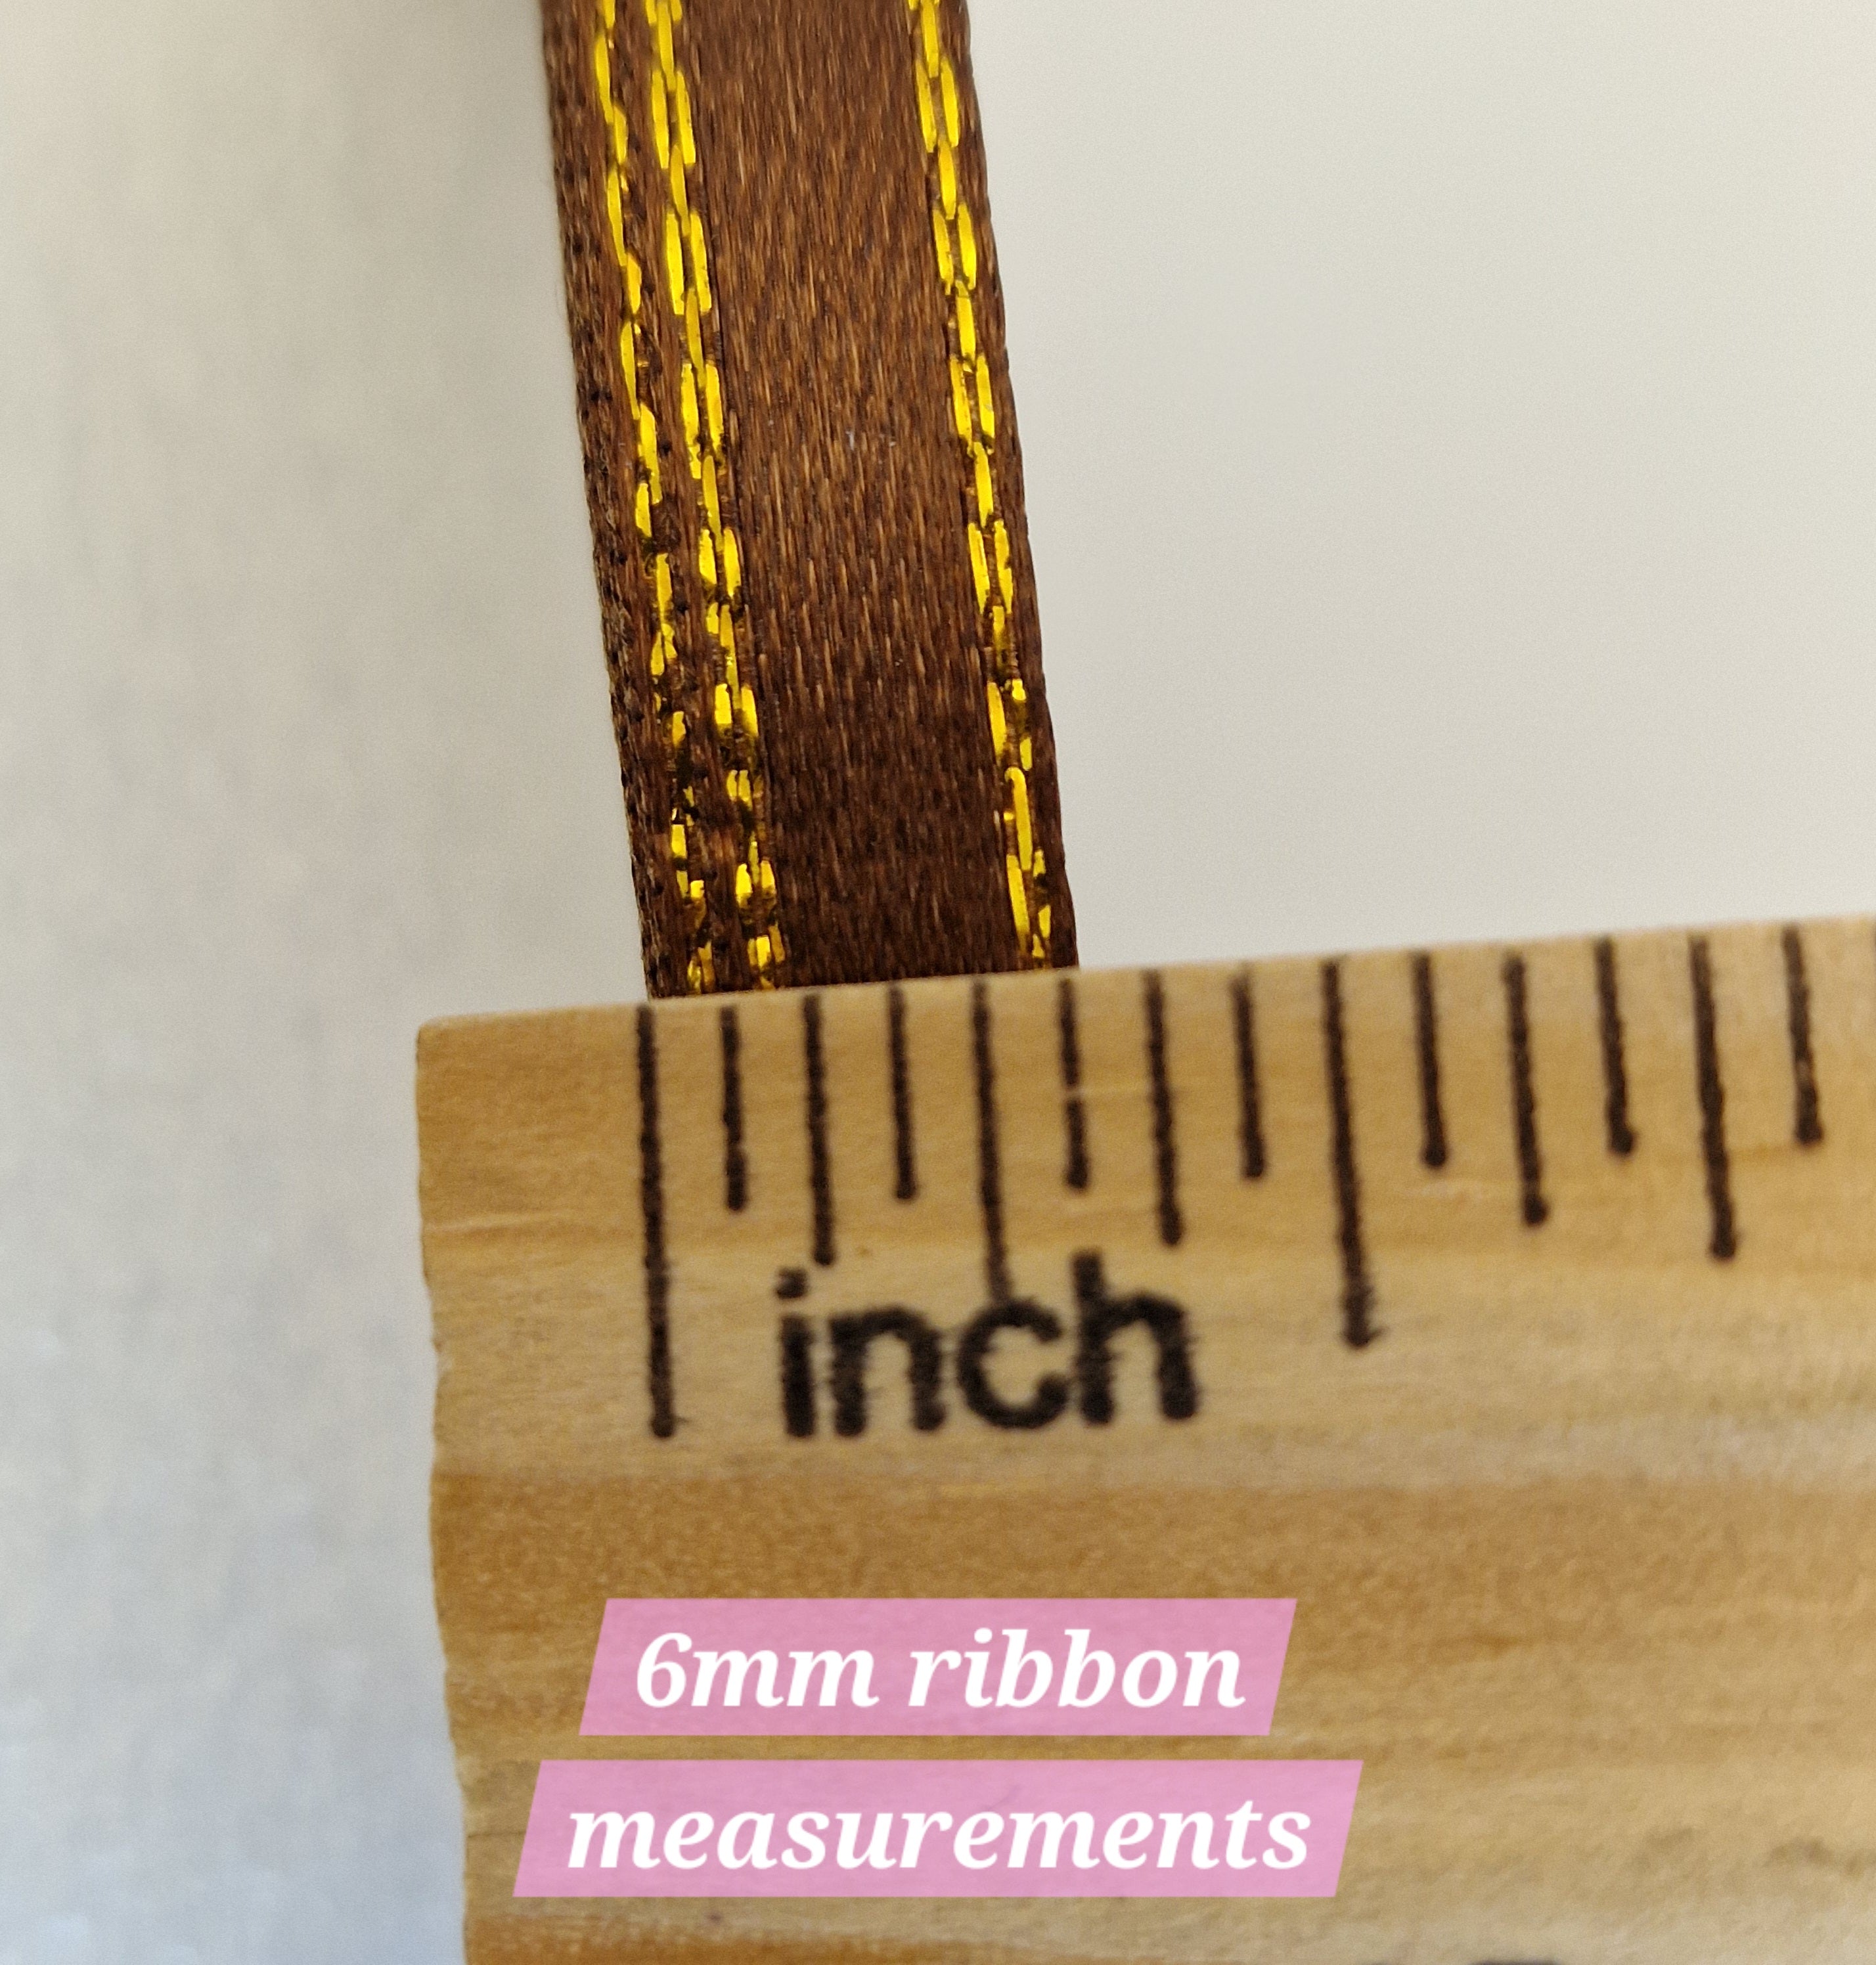 MajorCrafts 6mm 22metres Mustard Yellow with Gold Edge Trim Satin Fabric Ribbon Roll